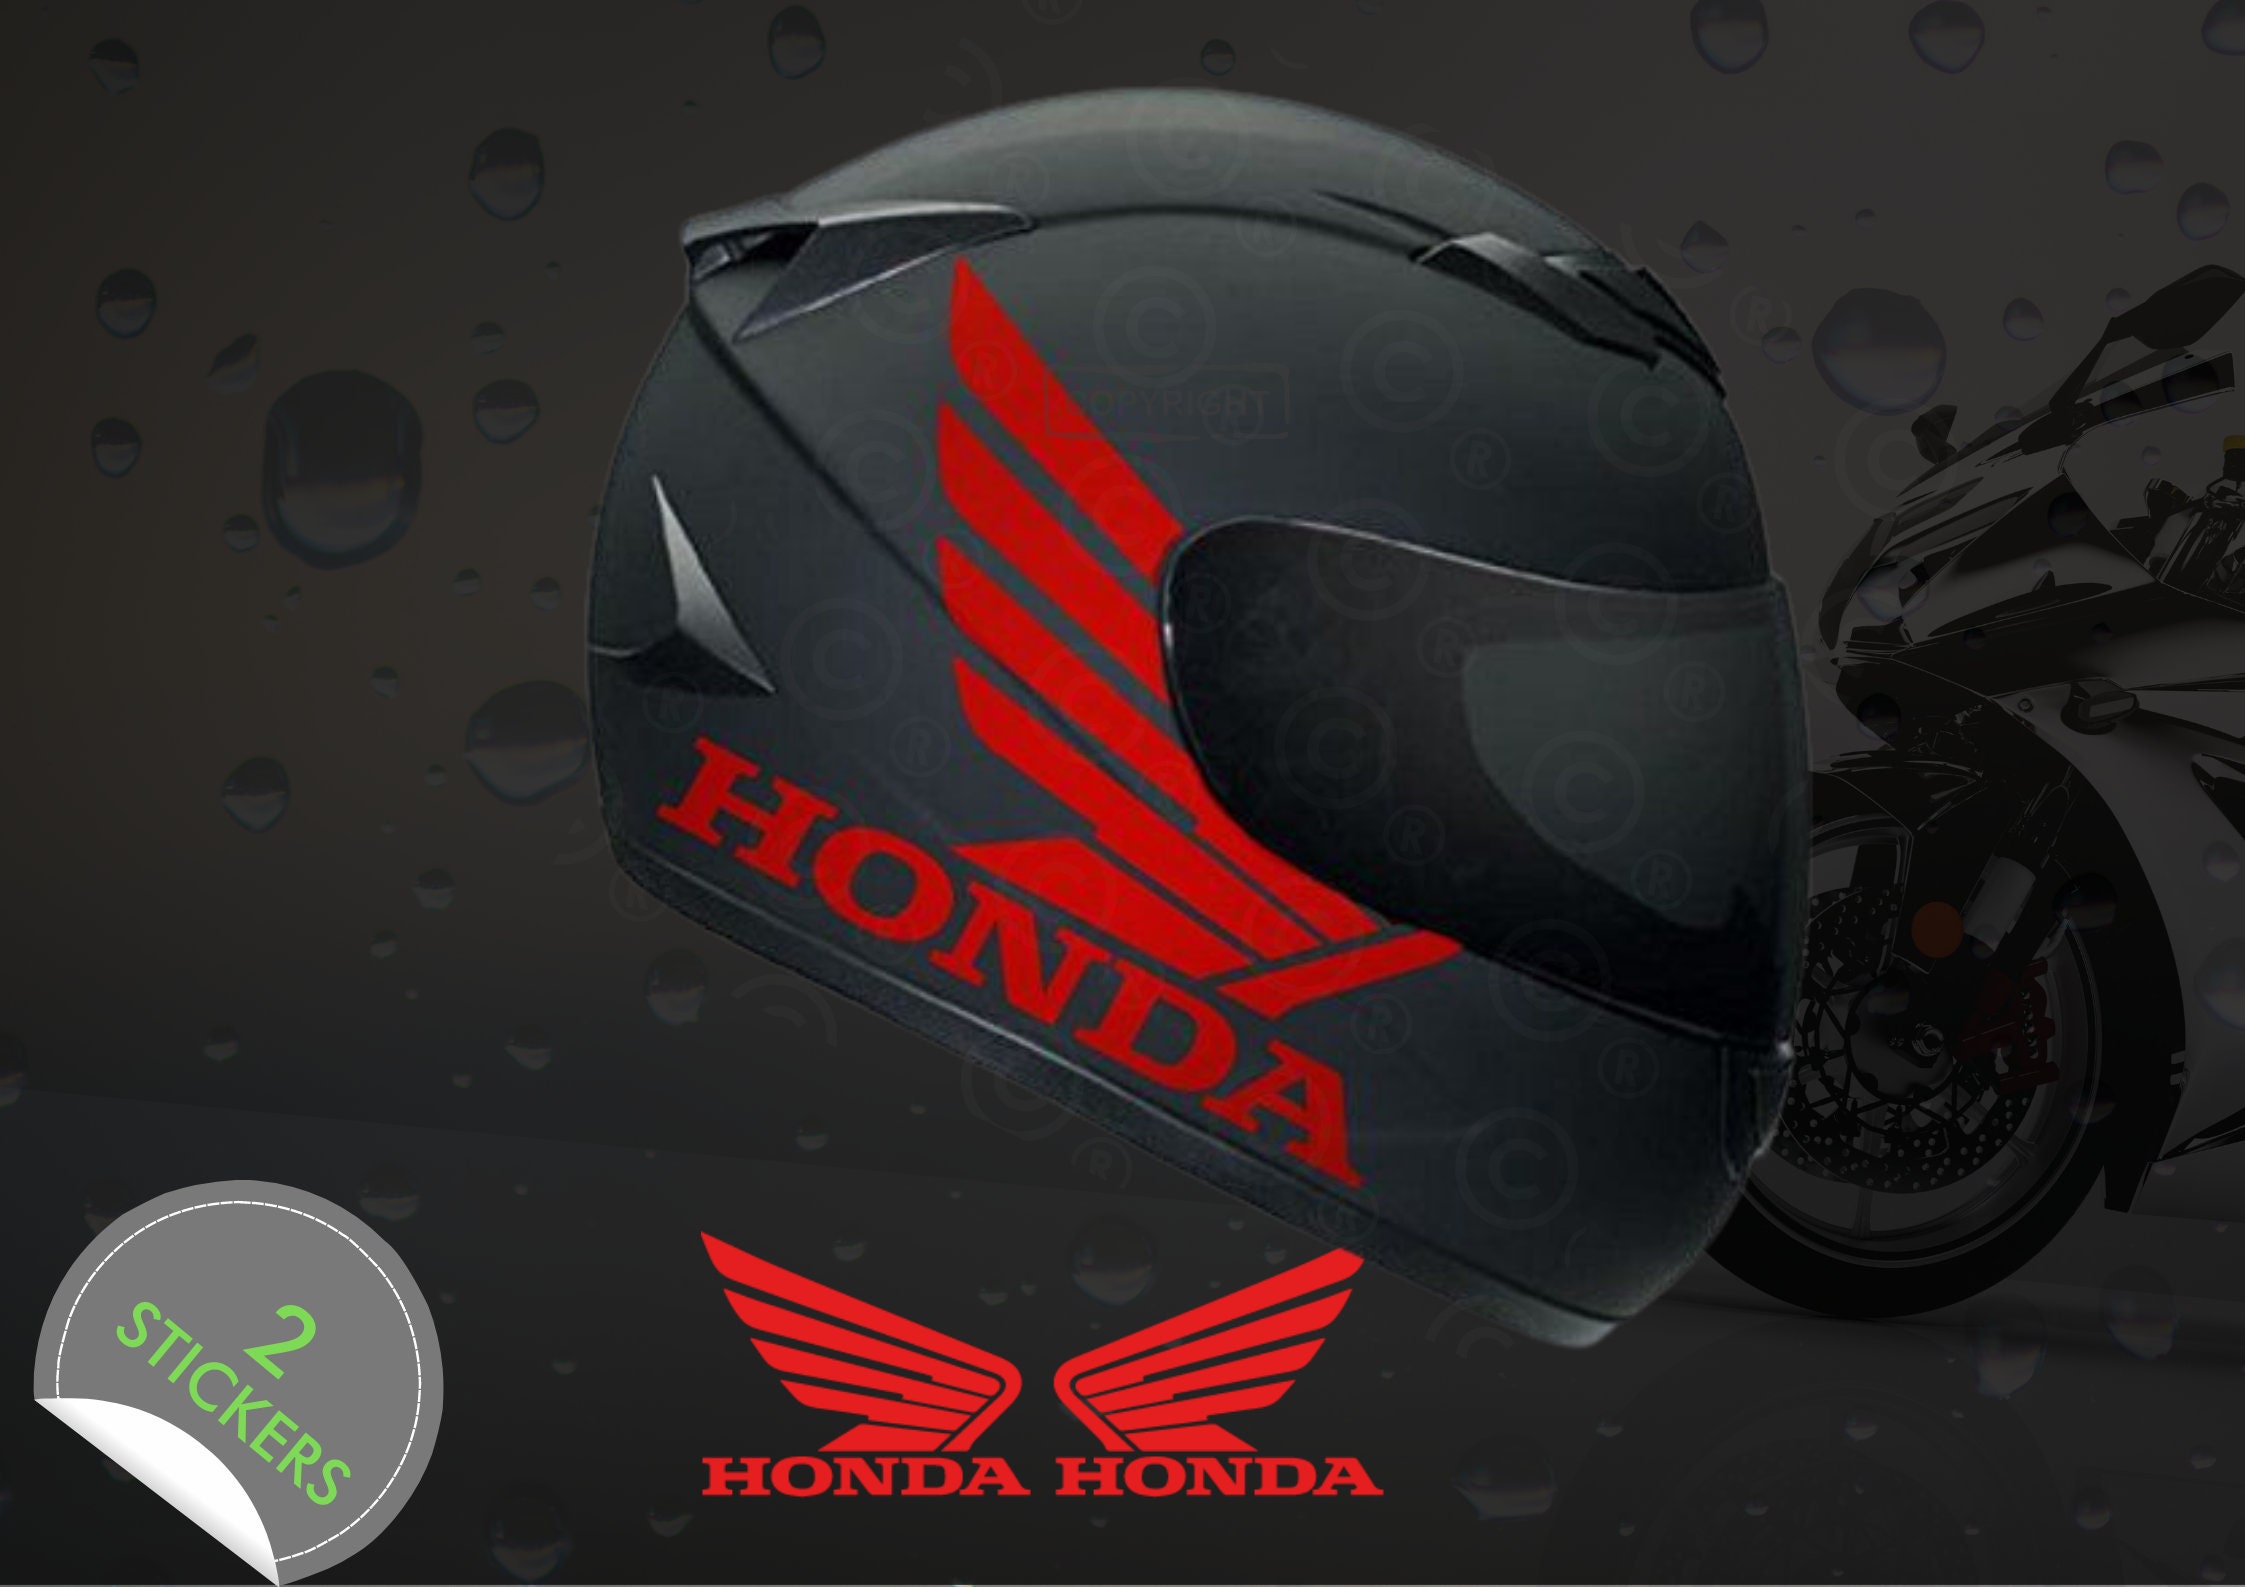 2 X Honda Wings Decal Sticker Set - For Motorcycle Helmets